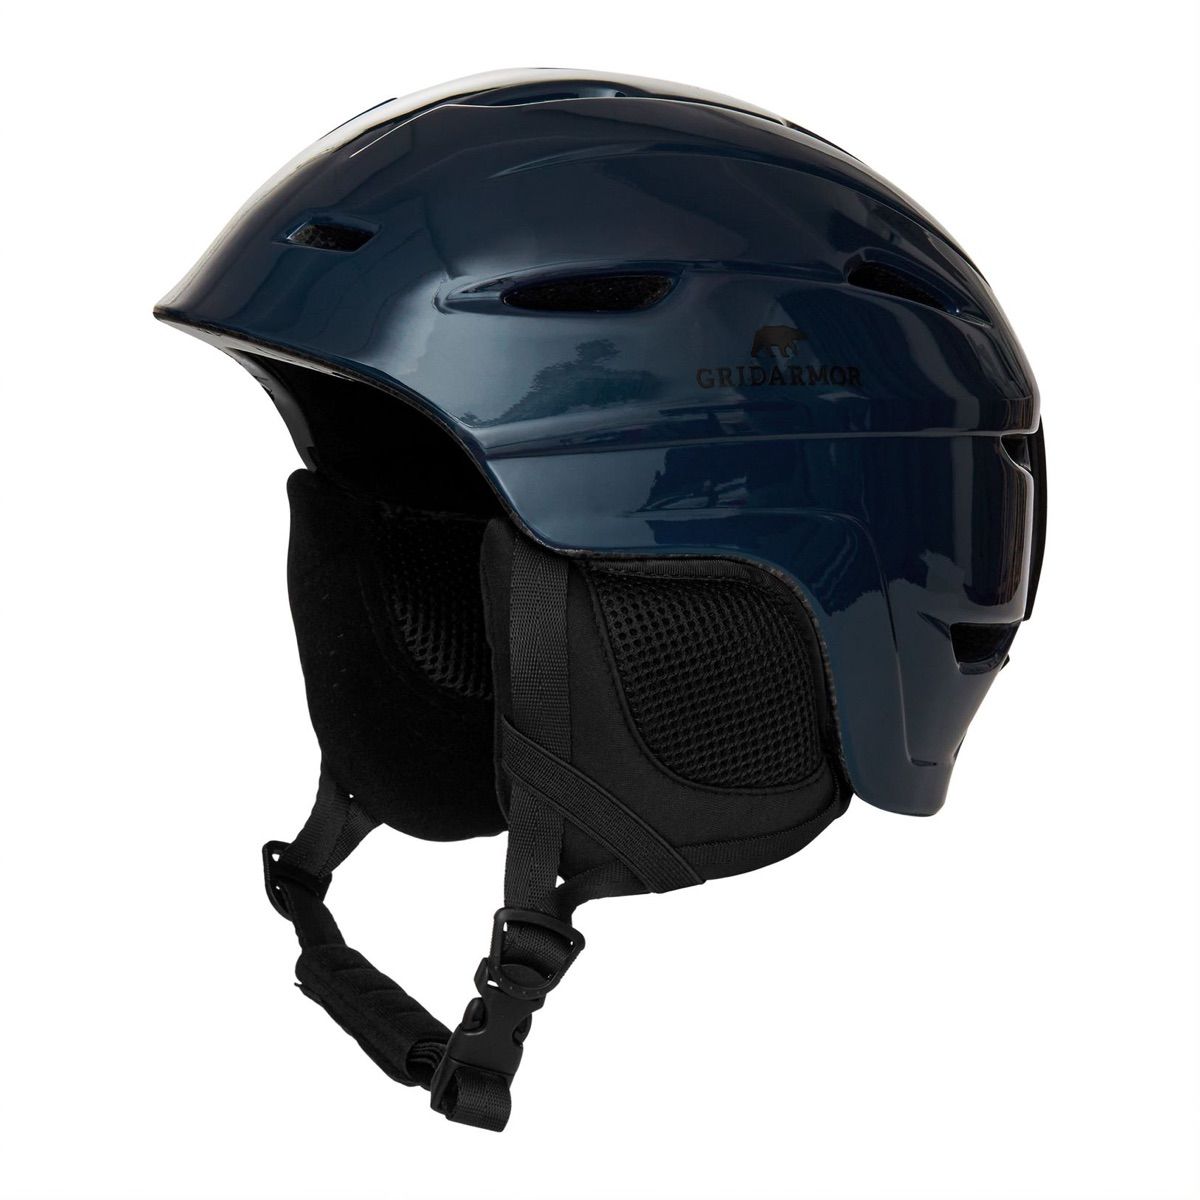 Gridarmor Kvitfjell Alpine Helmet Navy Blazer